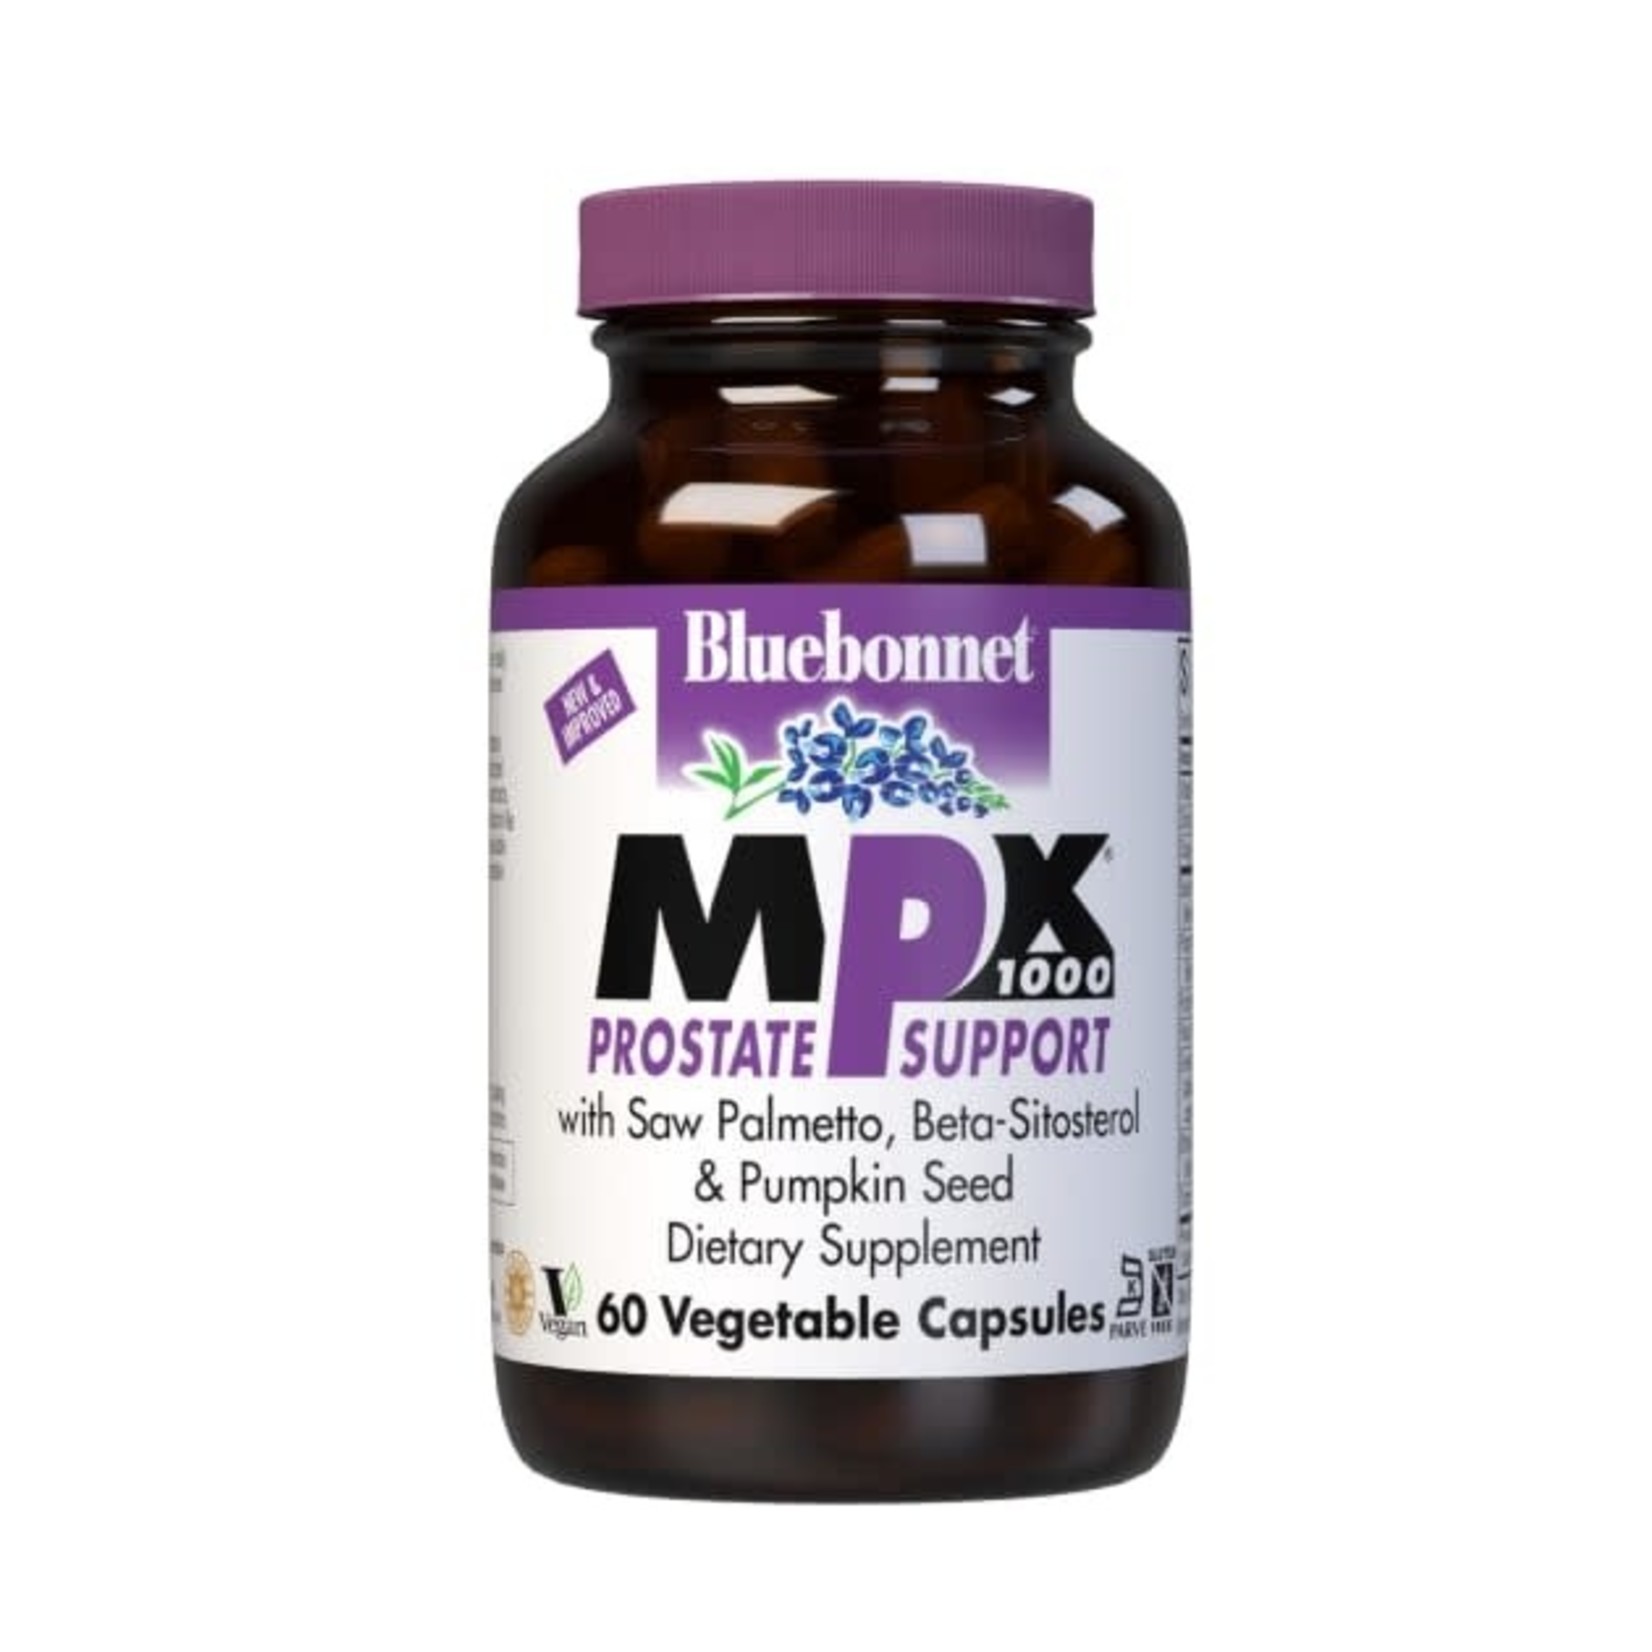 BlueBonnet Bluebonnet MPX 1000 Prostate Support 60ct